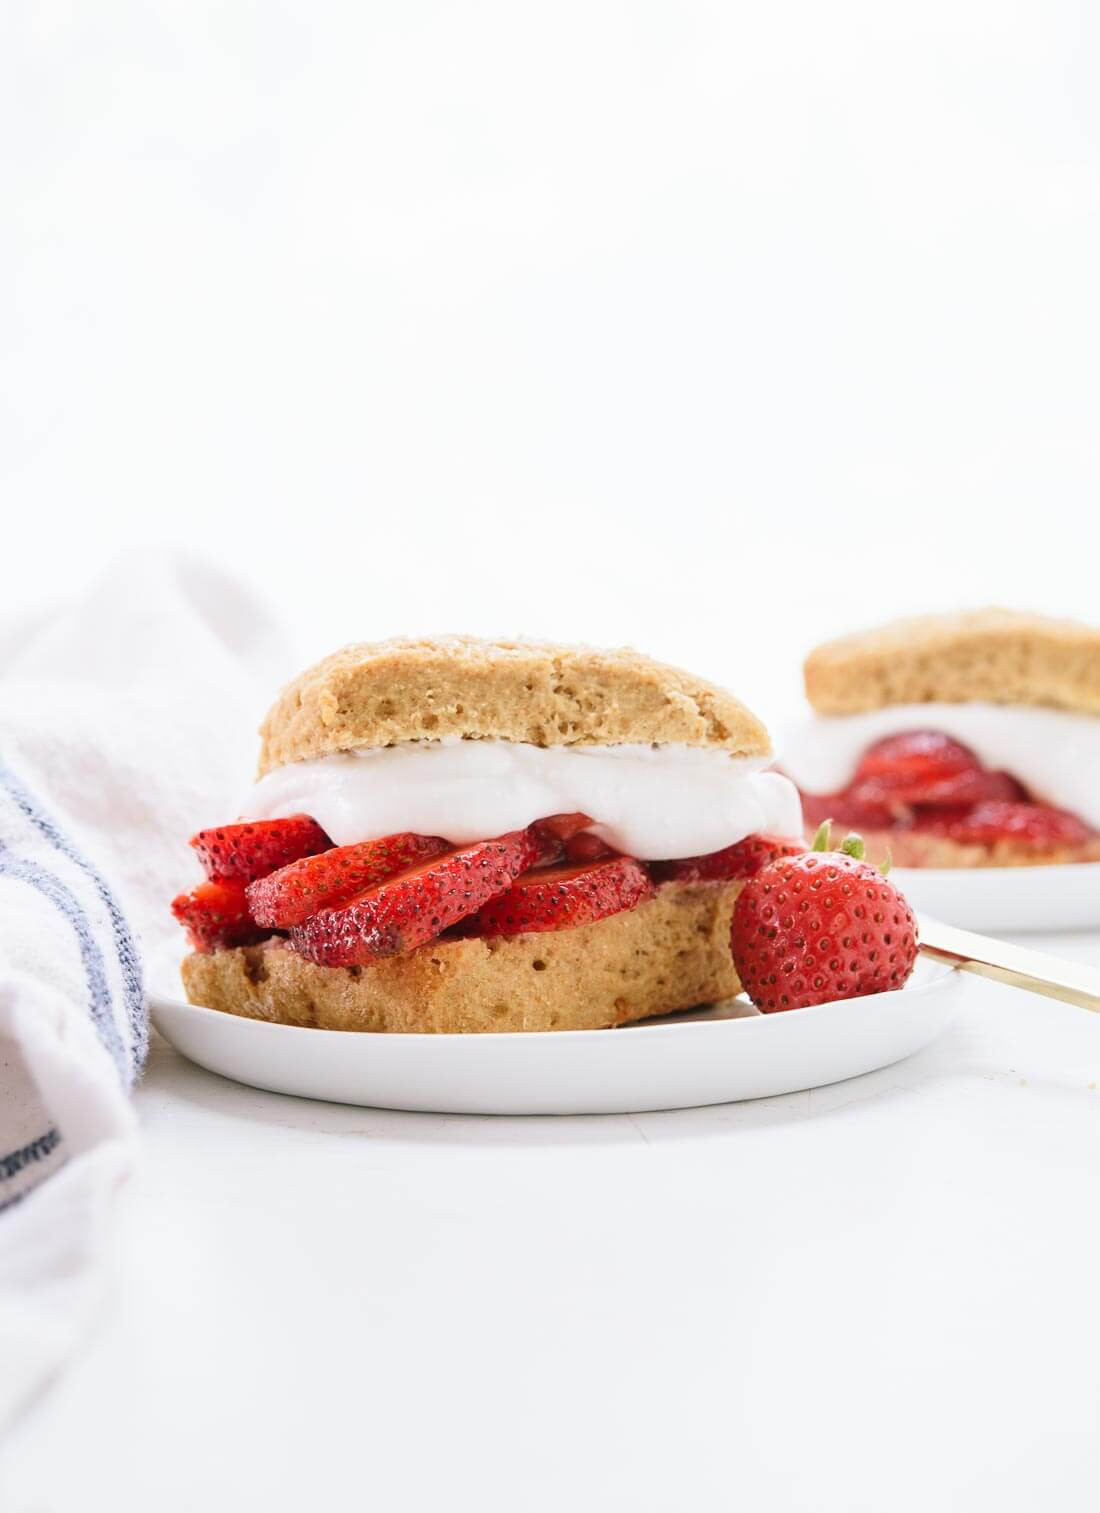 Healthy Strawberry Shortcake Recipe the Best Healthy Strawberry Shortcake